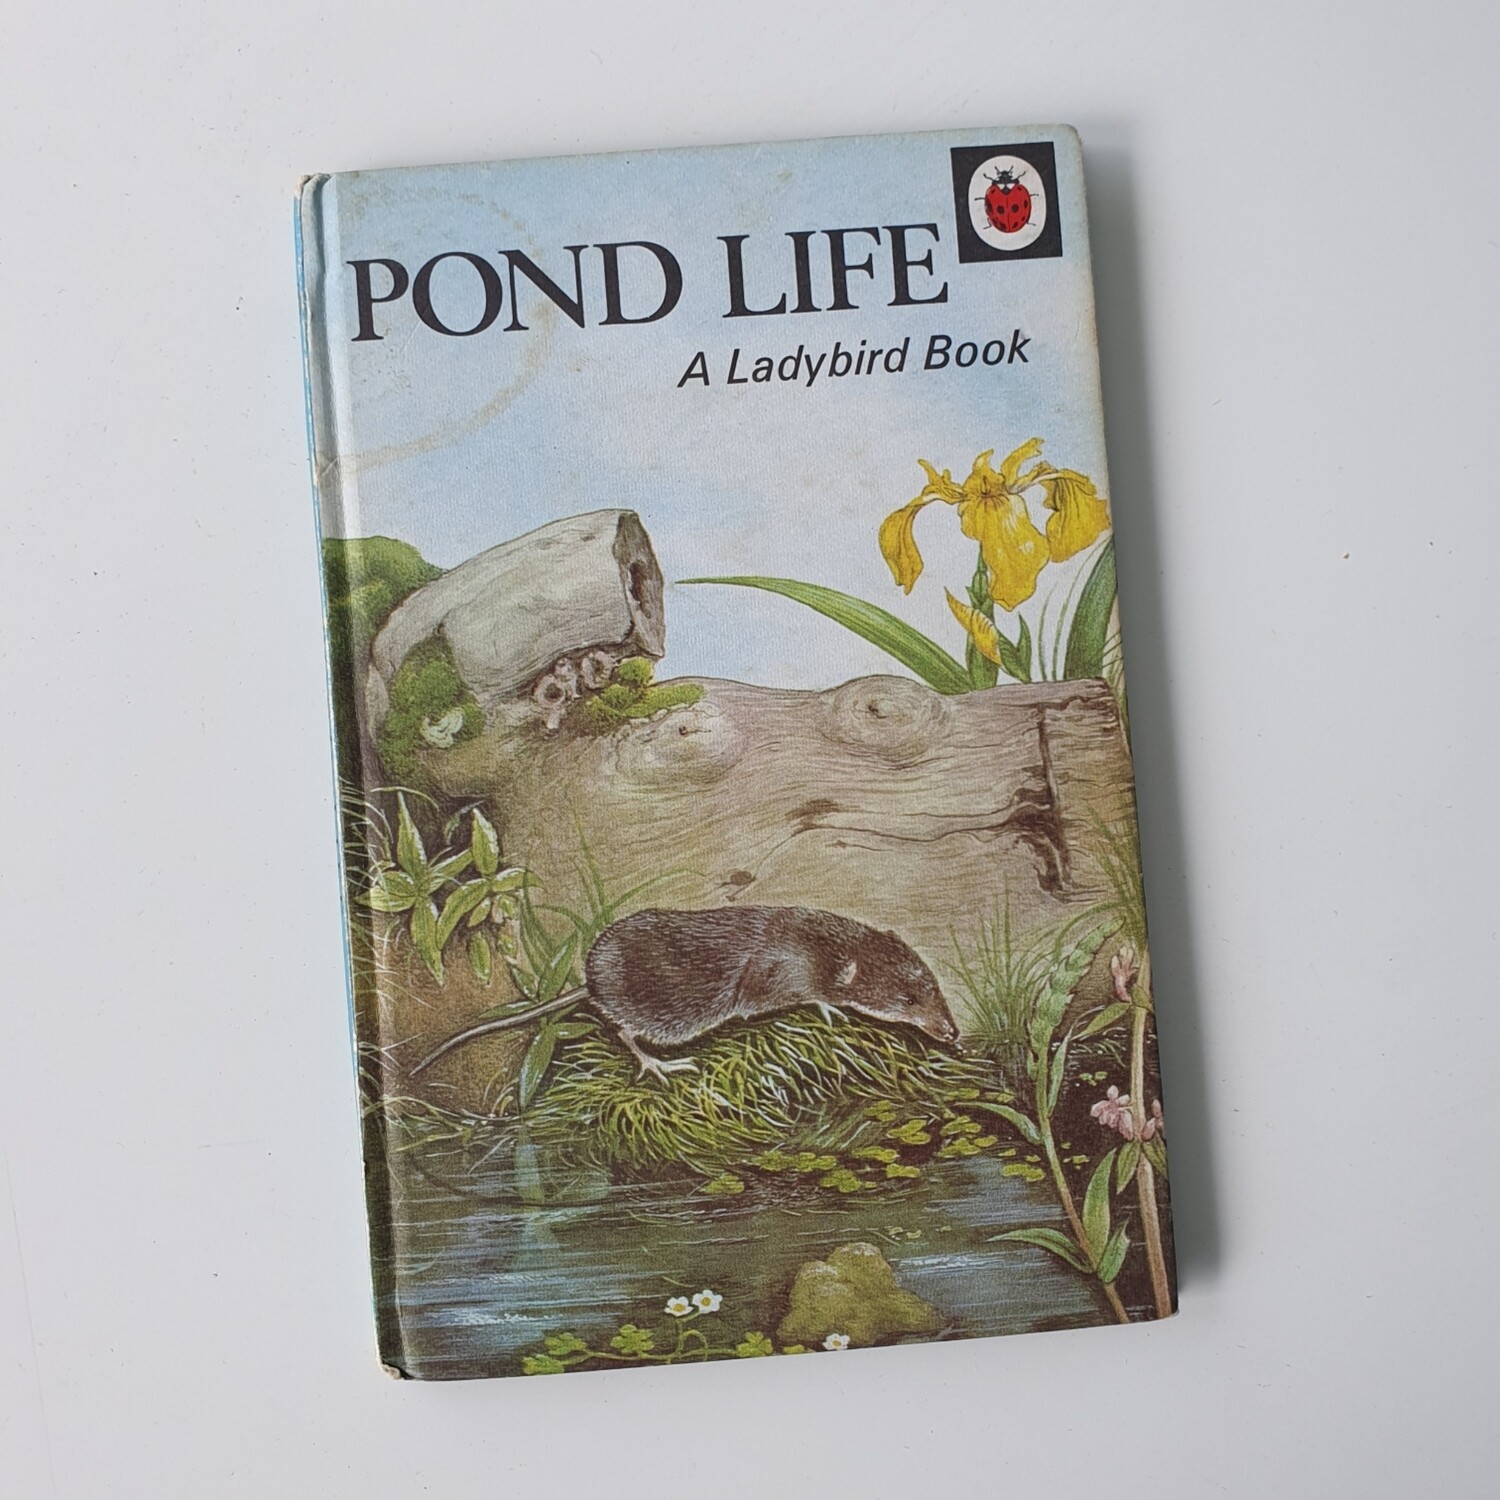 Pond Life Notebook - Ladybird book